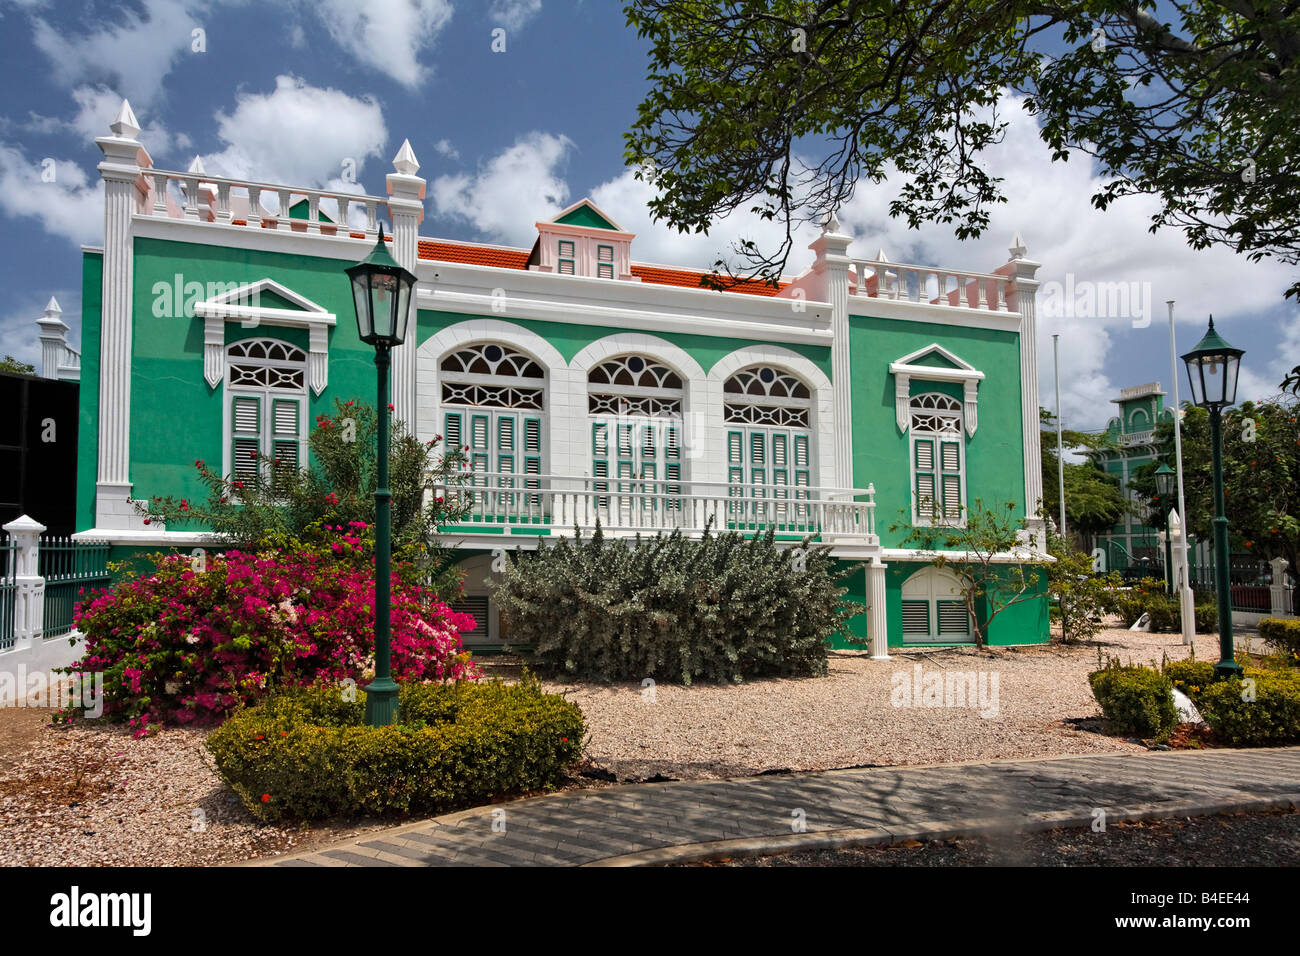 West Indies Aruba Oranjestadt colonial building Stock Photo